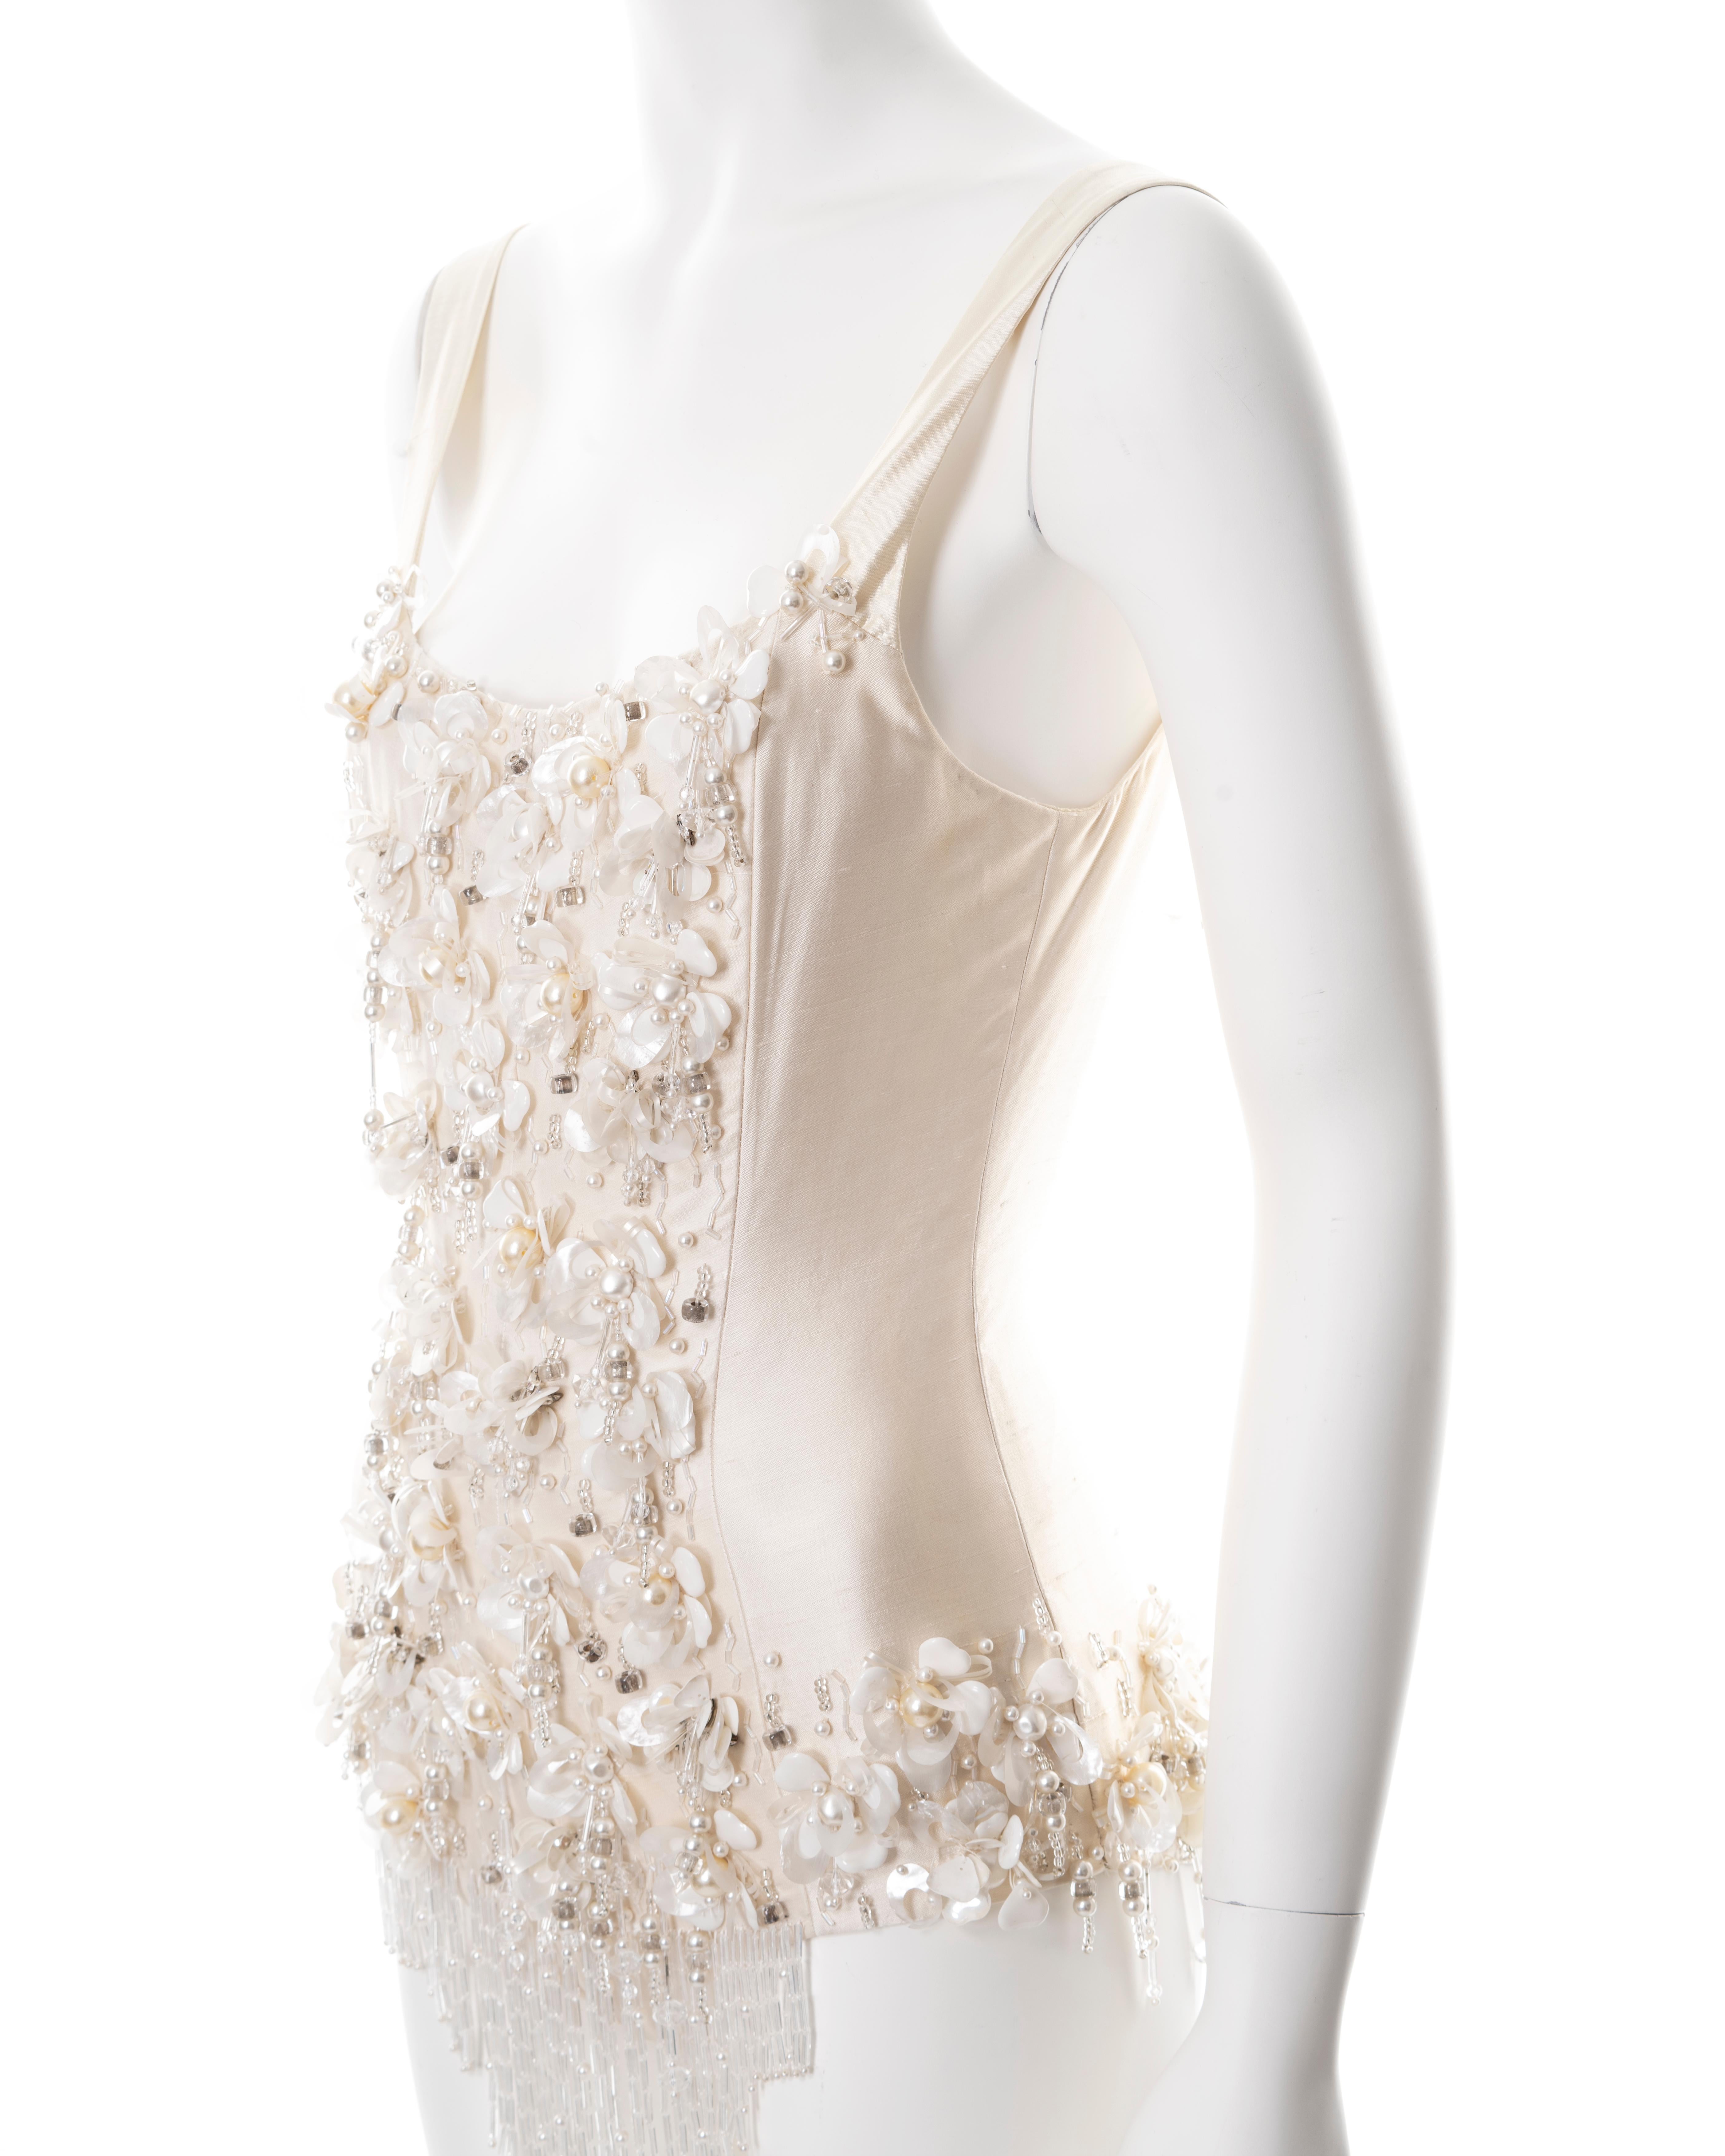  Chloé by Martine Sitbon floral embellished ivory silk bodysuit, ss 1991 5